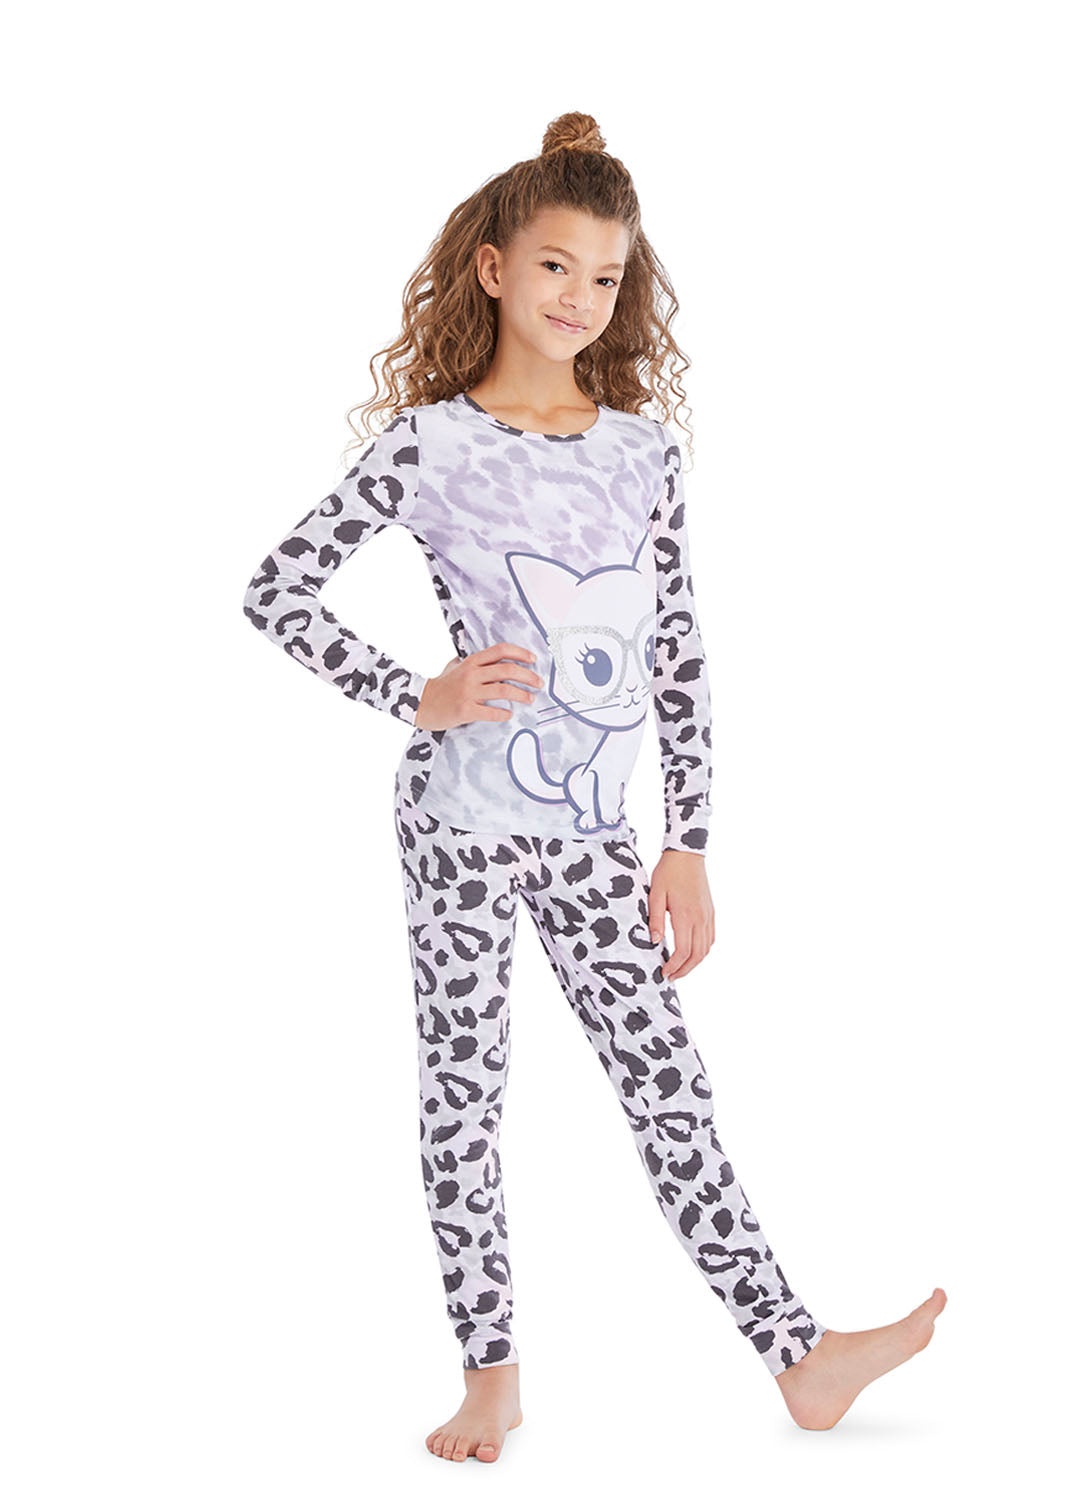 Cute Girl wearing Grey Cat Pajama Set